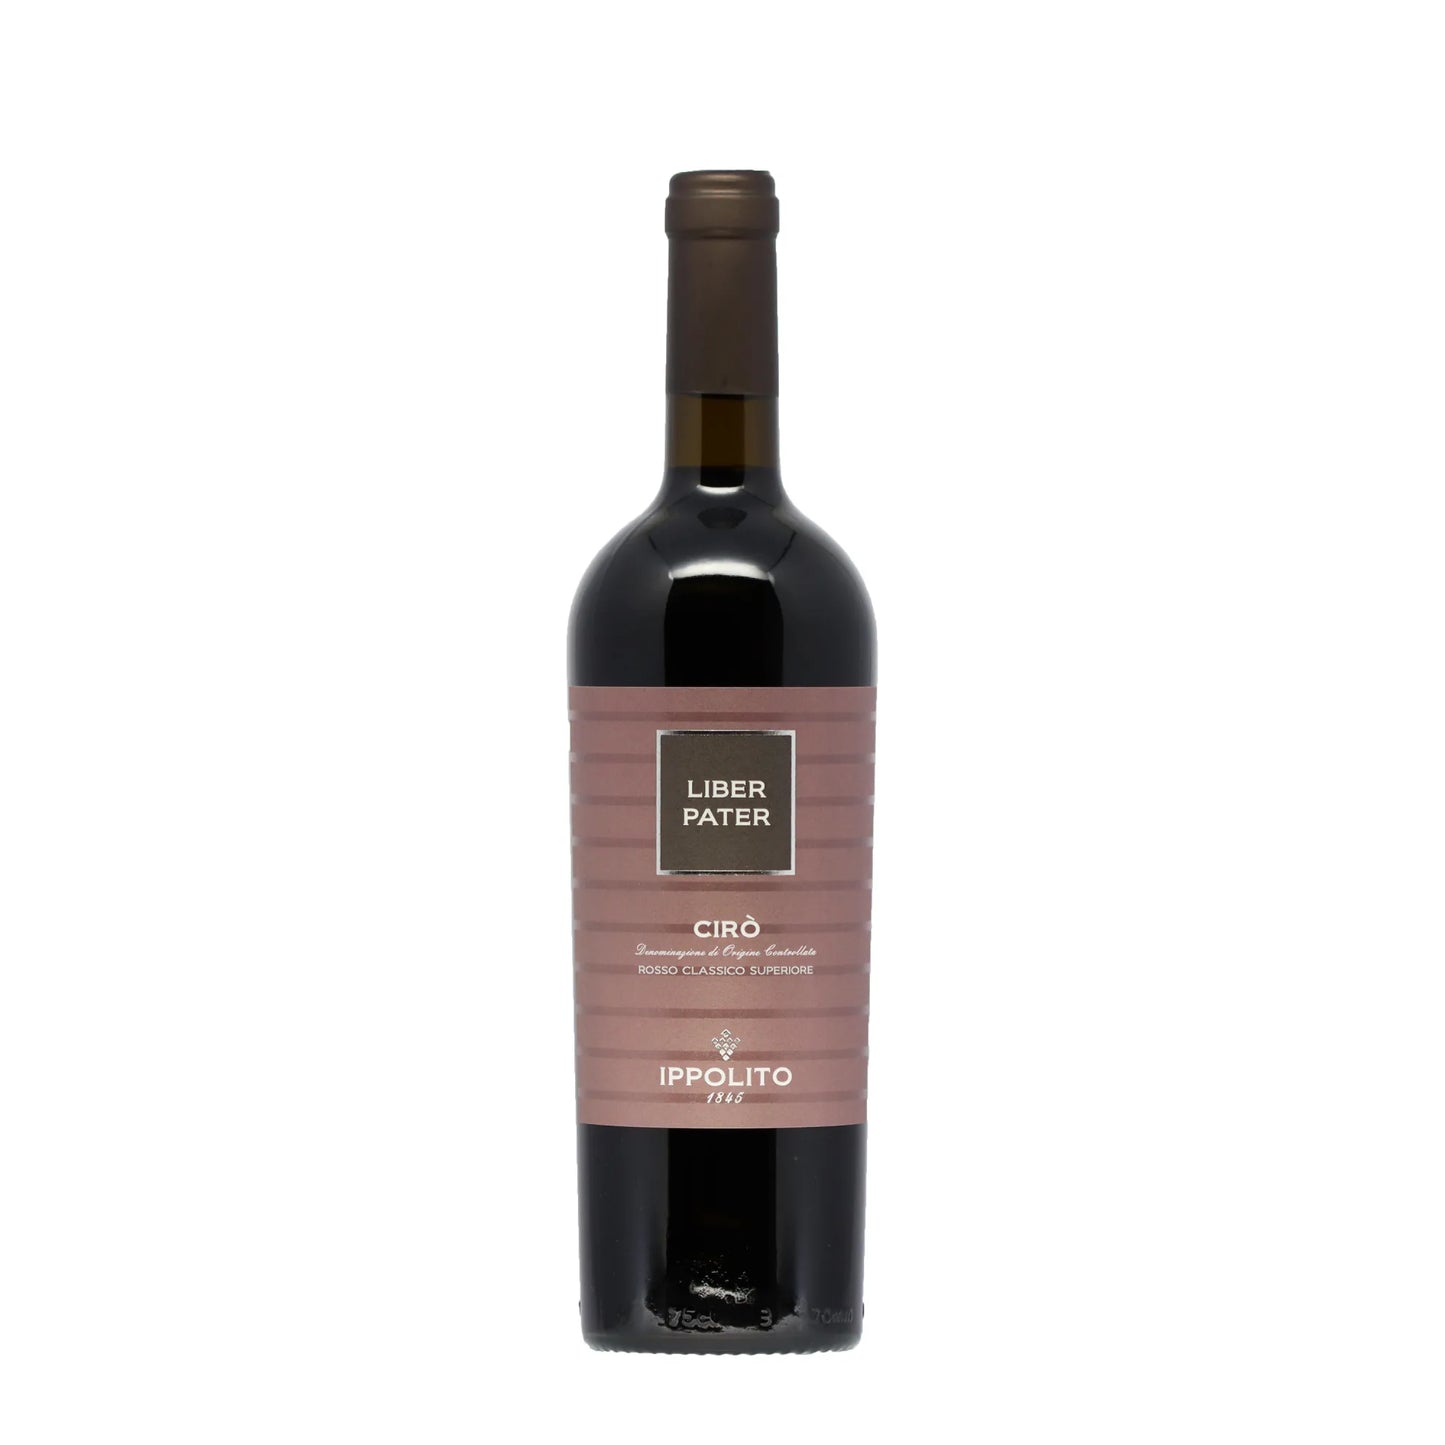 Liber Pater Cirò DOC 2020 Ippolito 1845 Italien - Rotwein - Wein